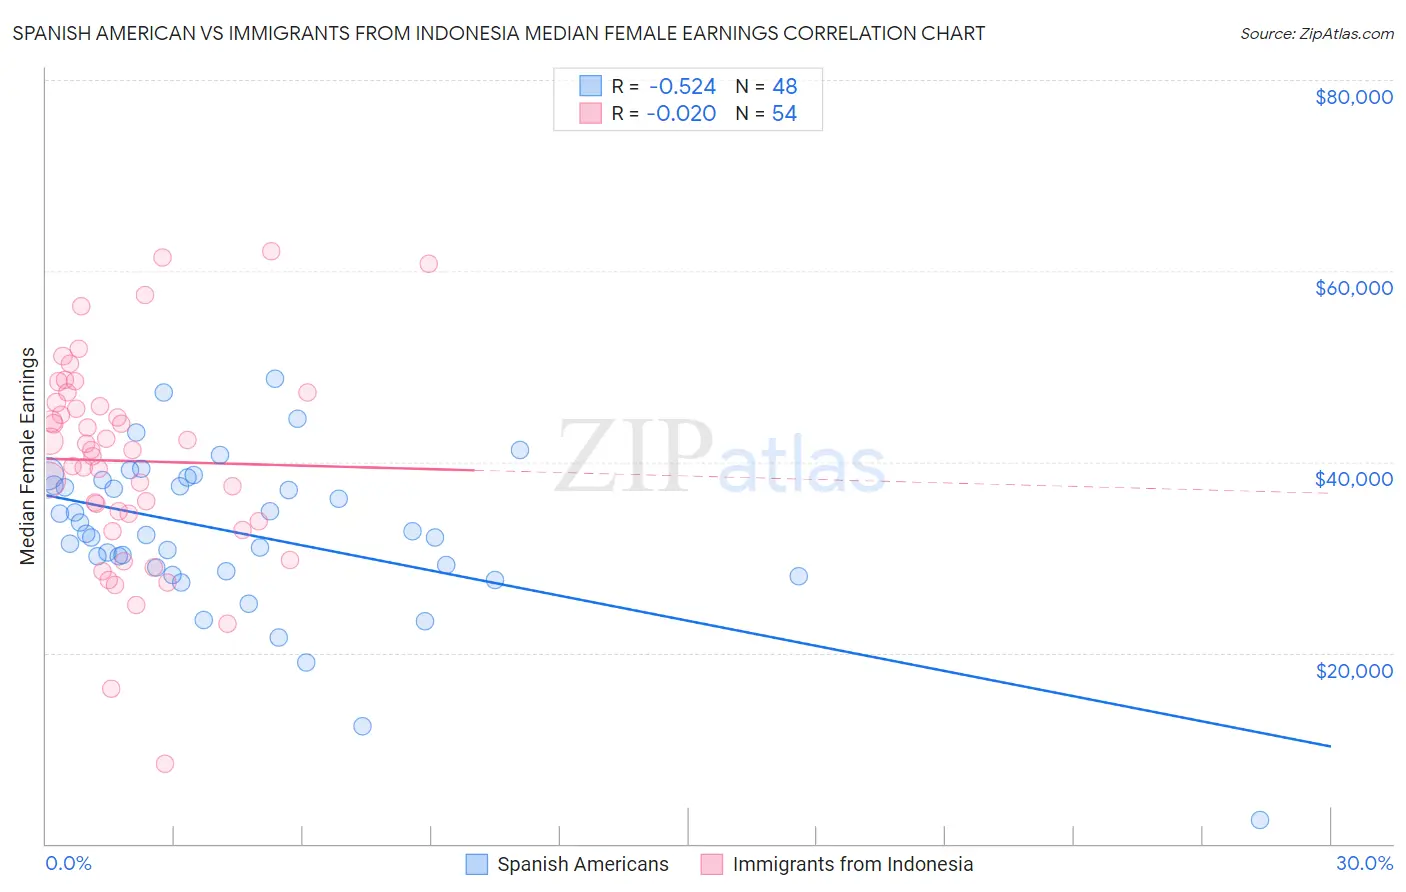 Spanish American vs Immigrants from Indonesia Median Female Earnings